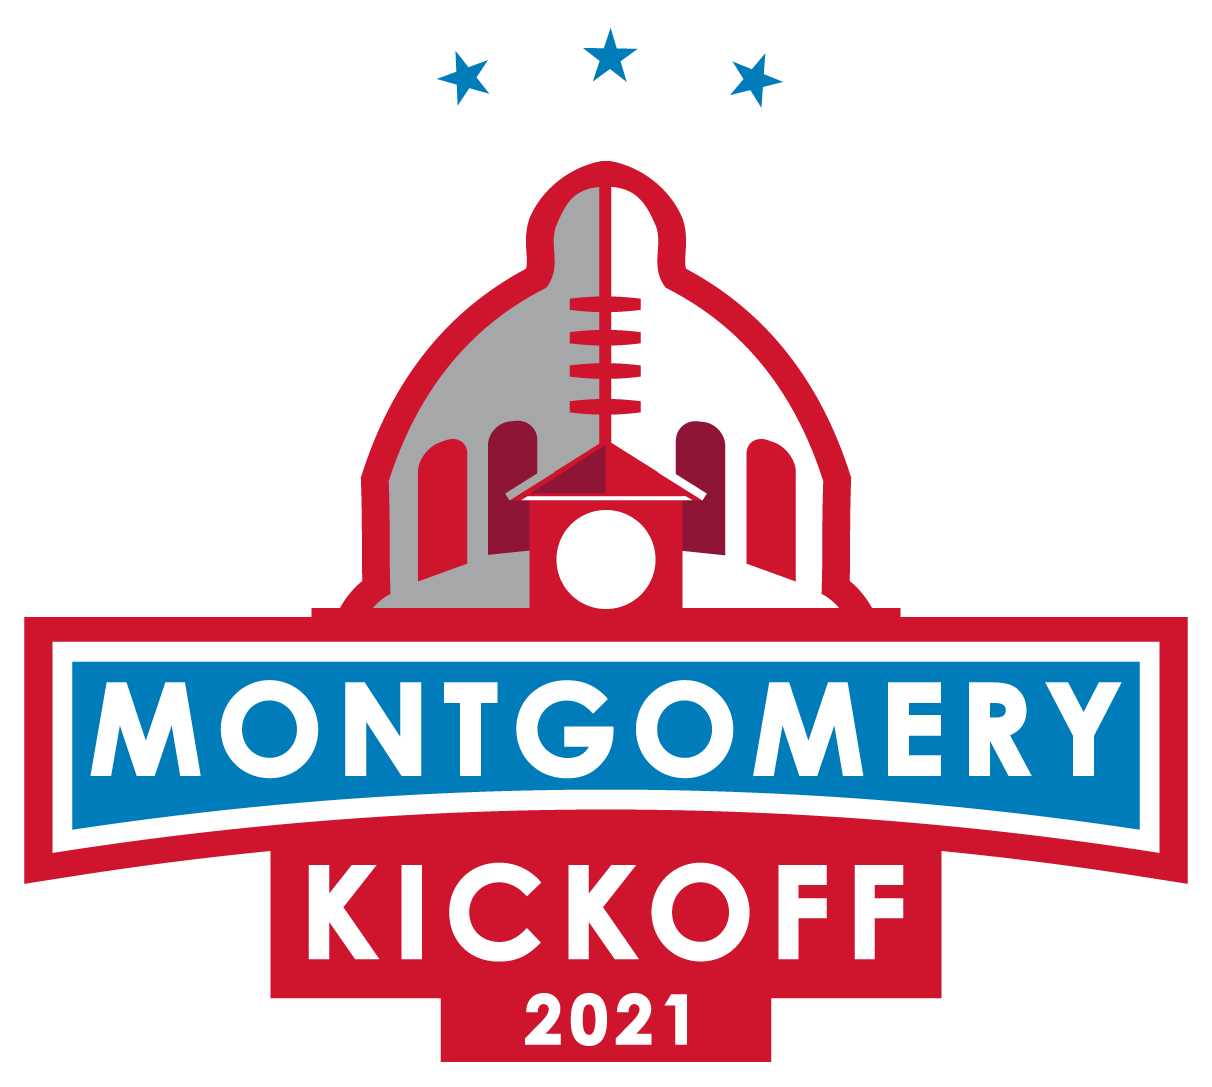 Montgomery kickoff logo 01